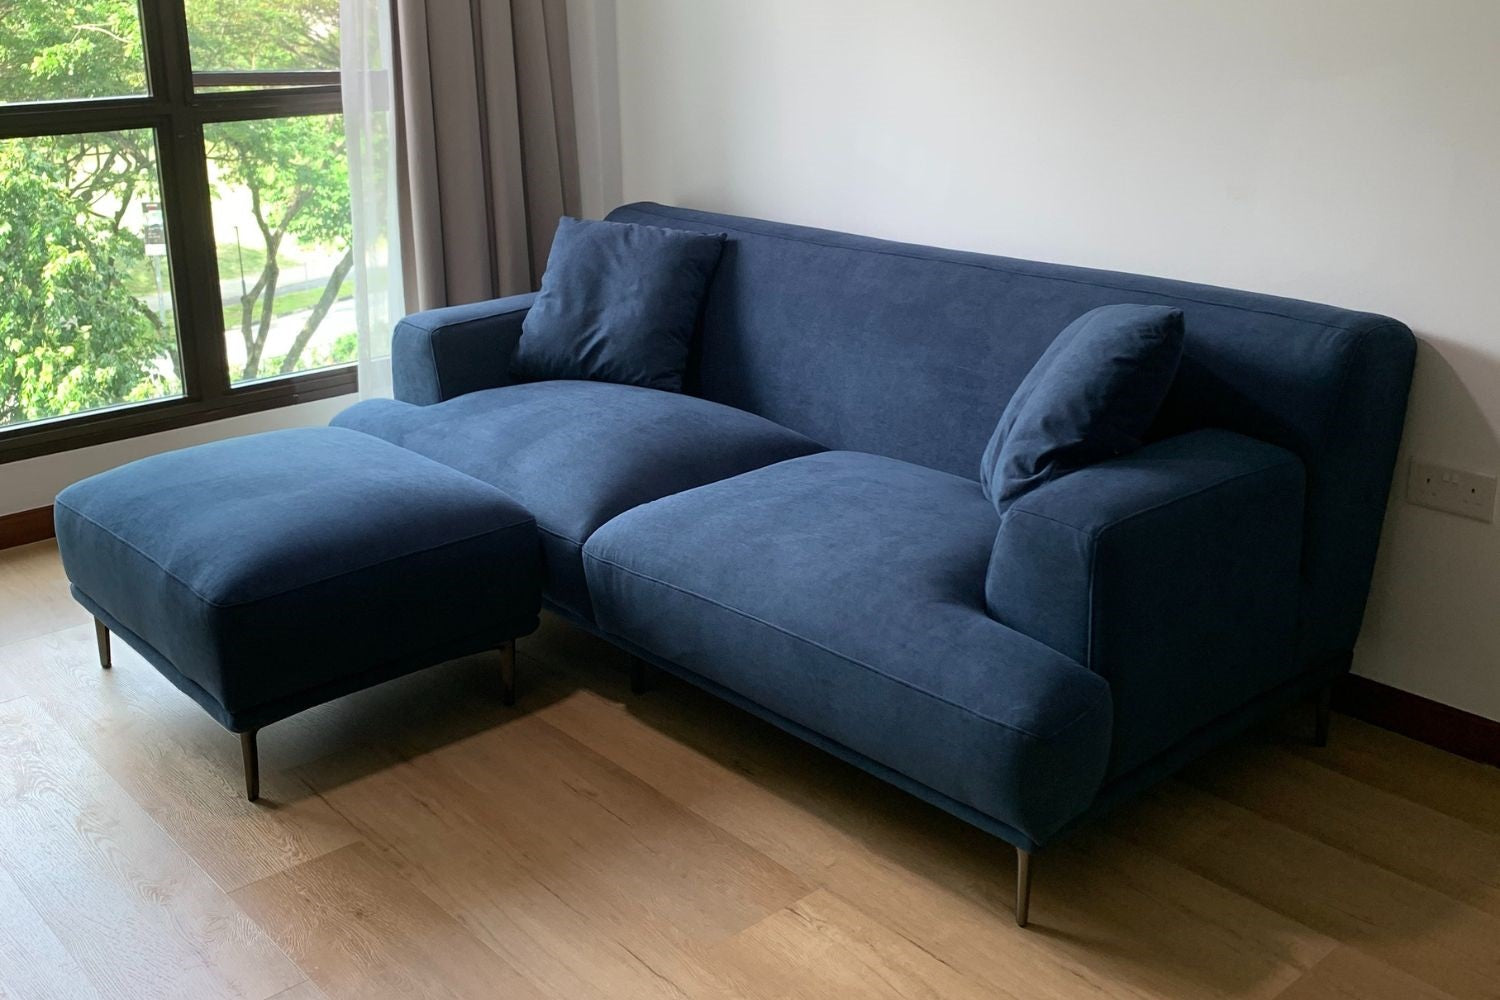 Crystal 3 seater 210cm dark blue fabric sofa + ottoman in customer's home